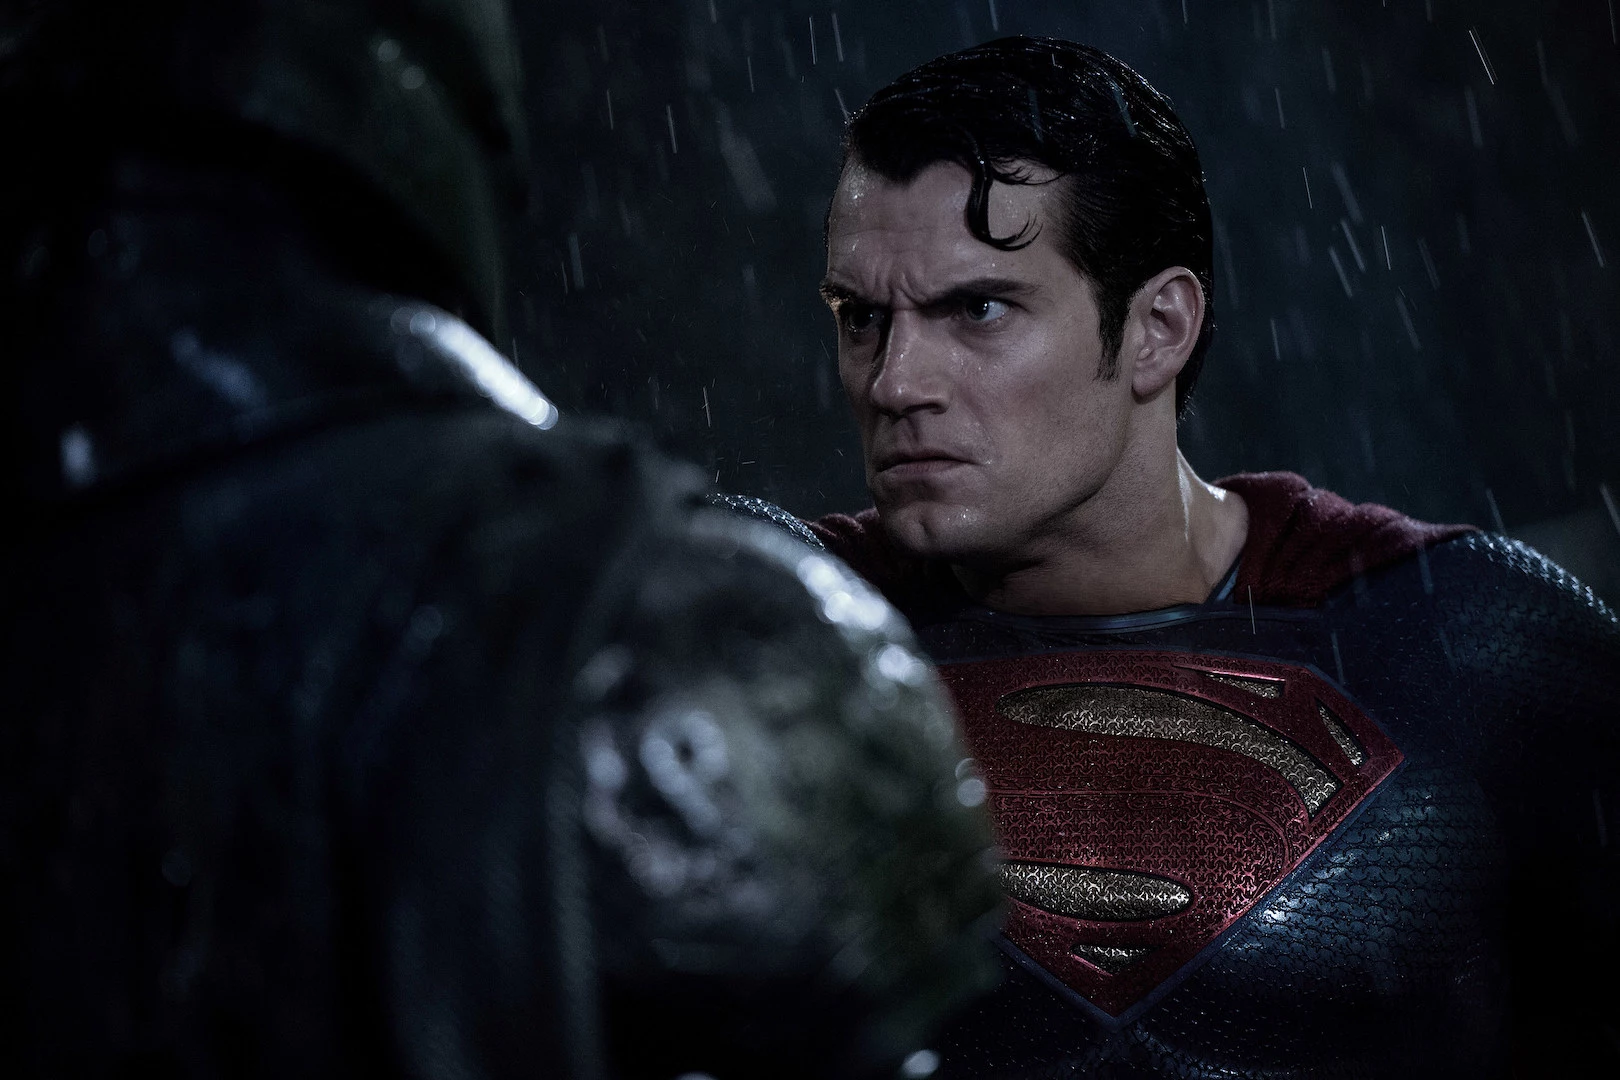 Man of Steel 2: Henry Cavill's Superman Needs To Return Soon